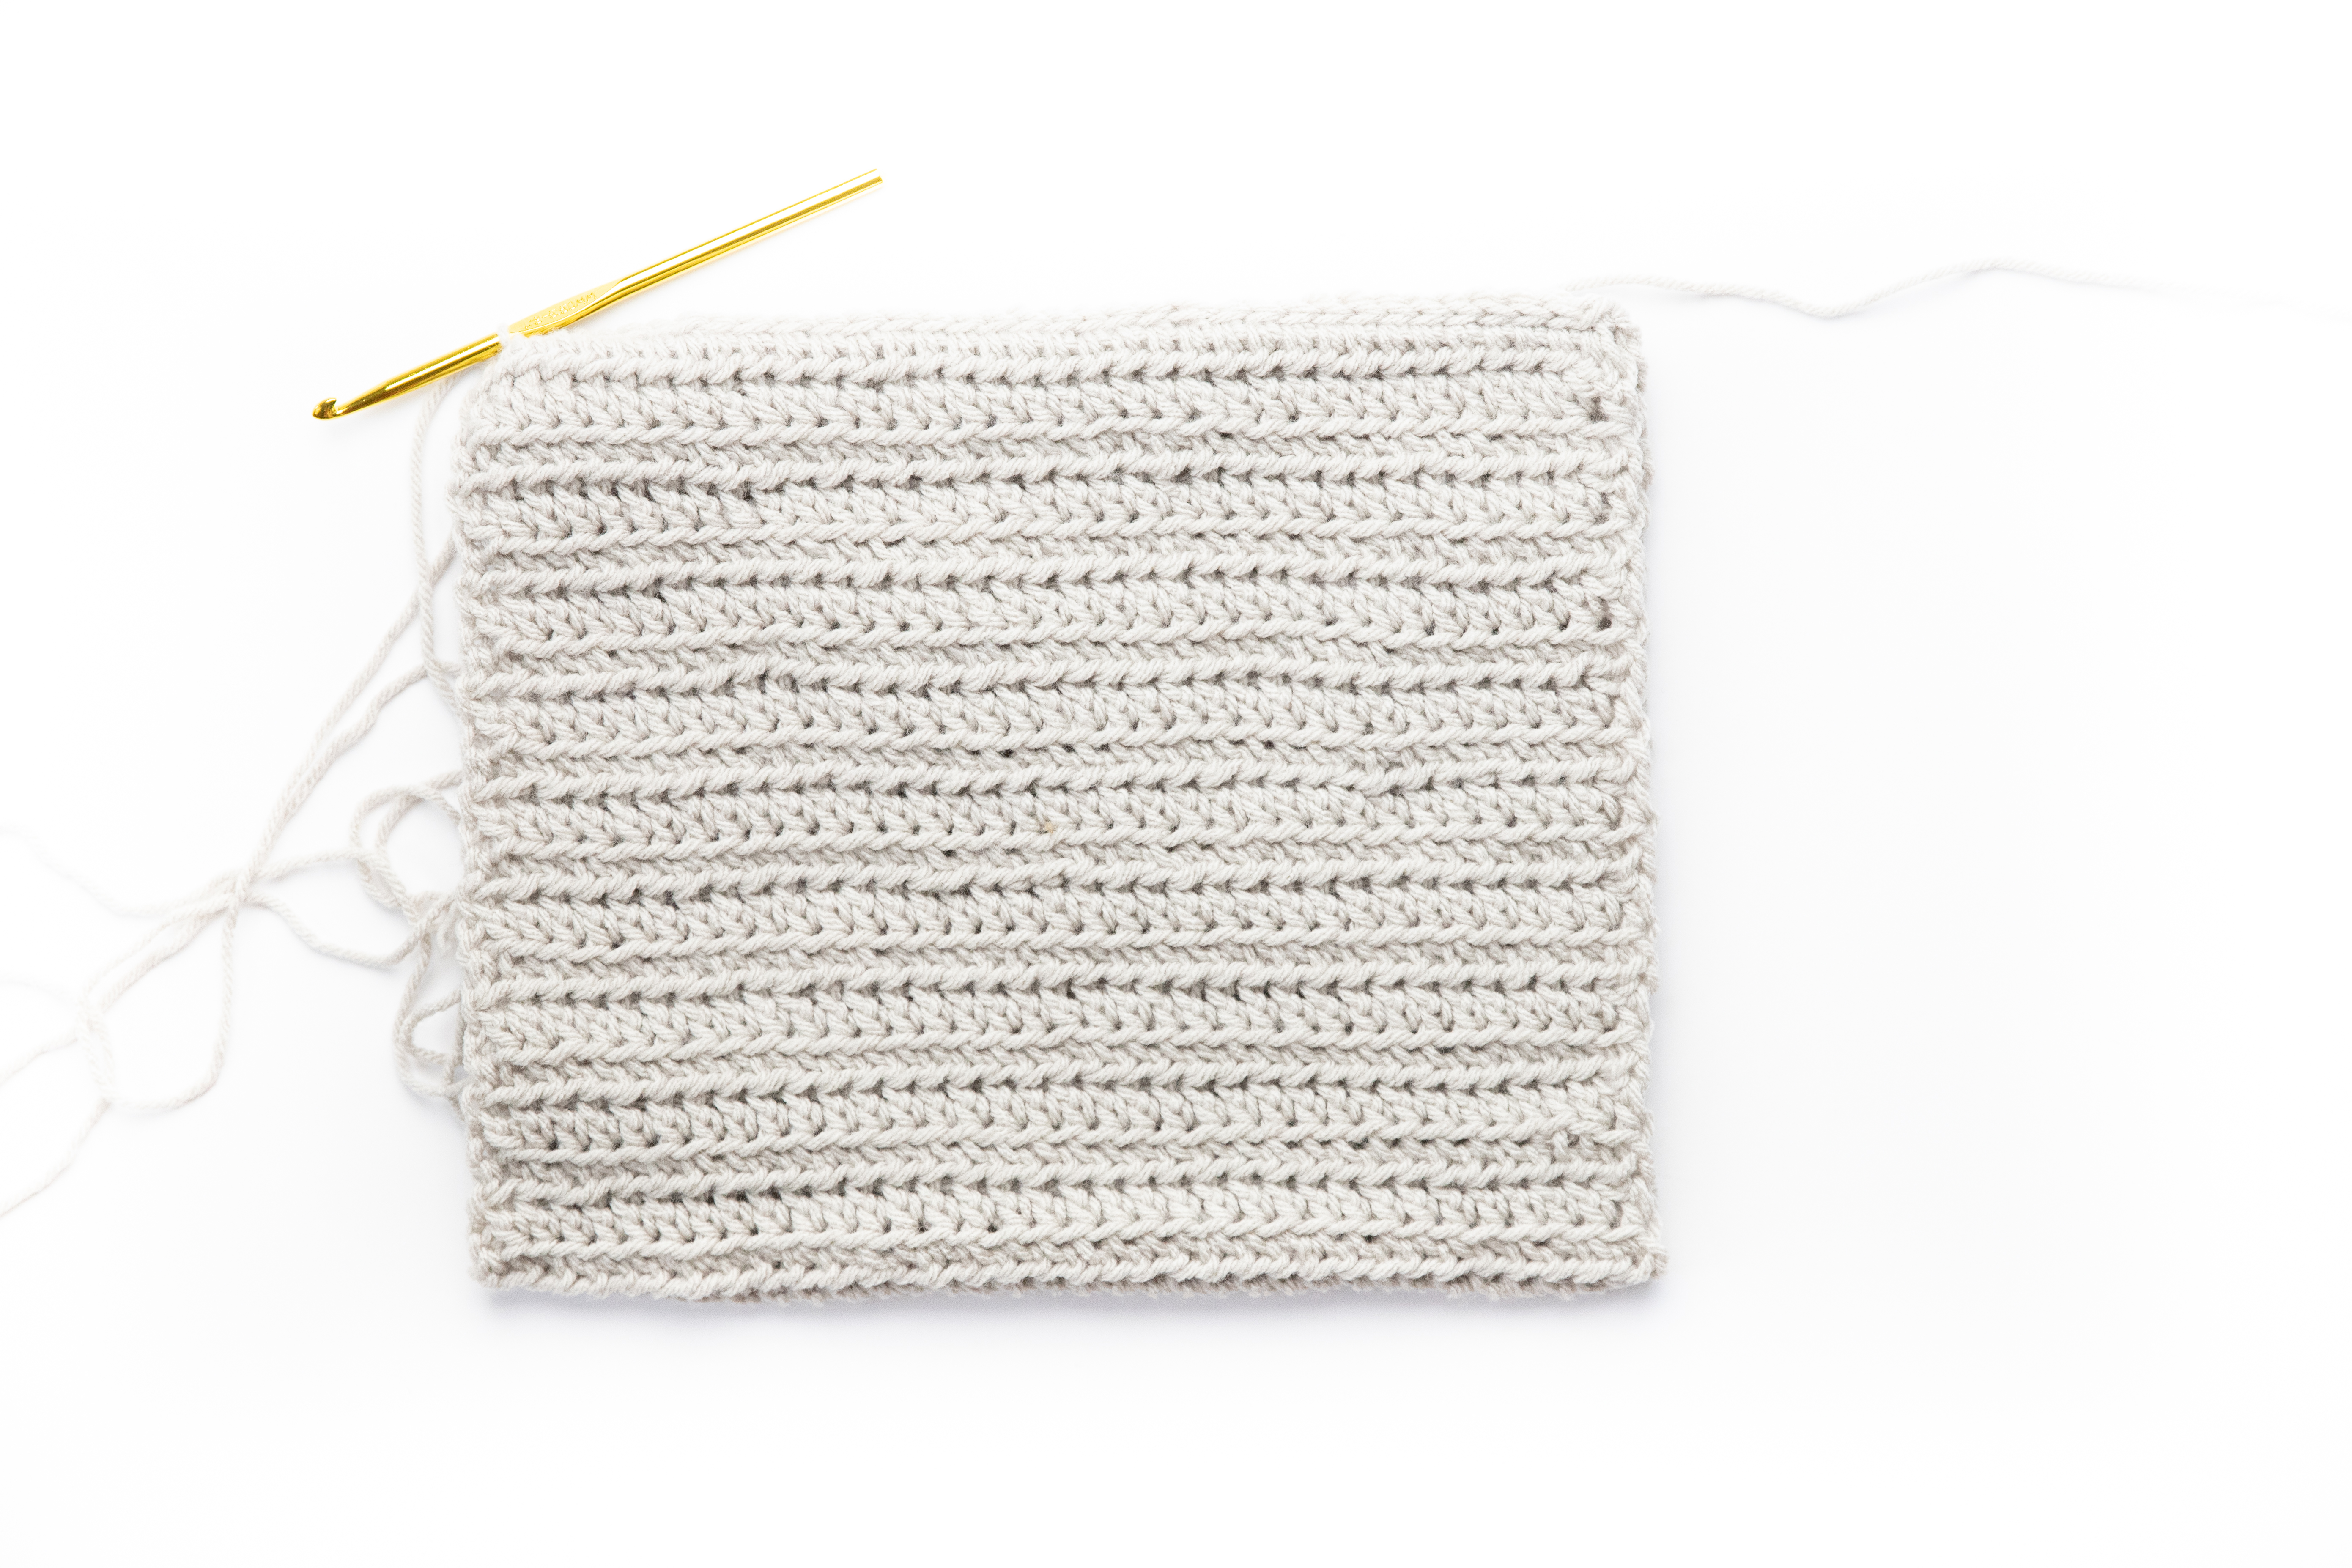 Crochet Basics: How to Half Double Crochet + Make a Hat! ...EASY tutorial// www.deliacreates.com